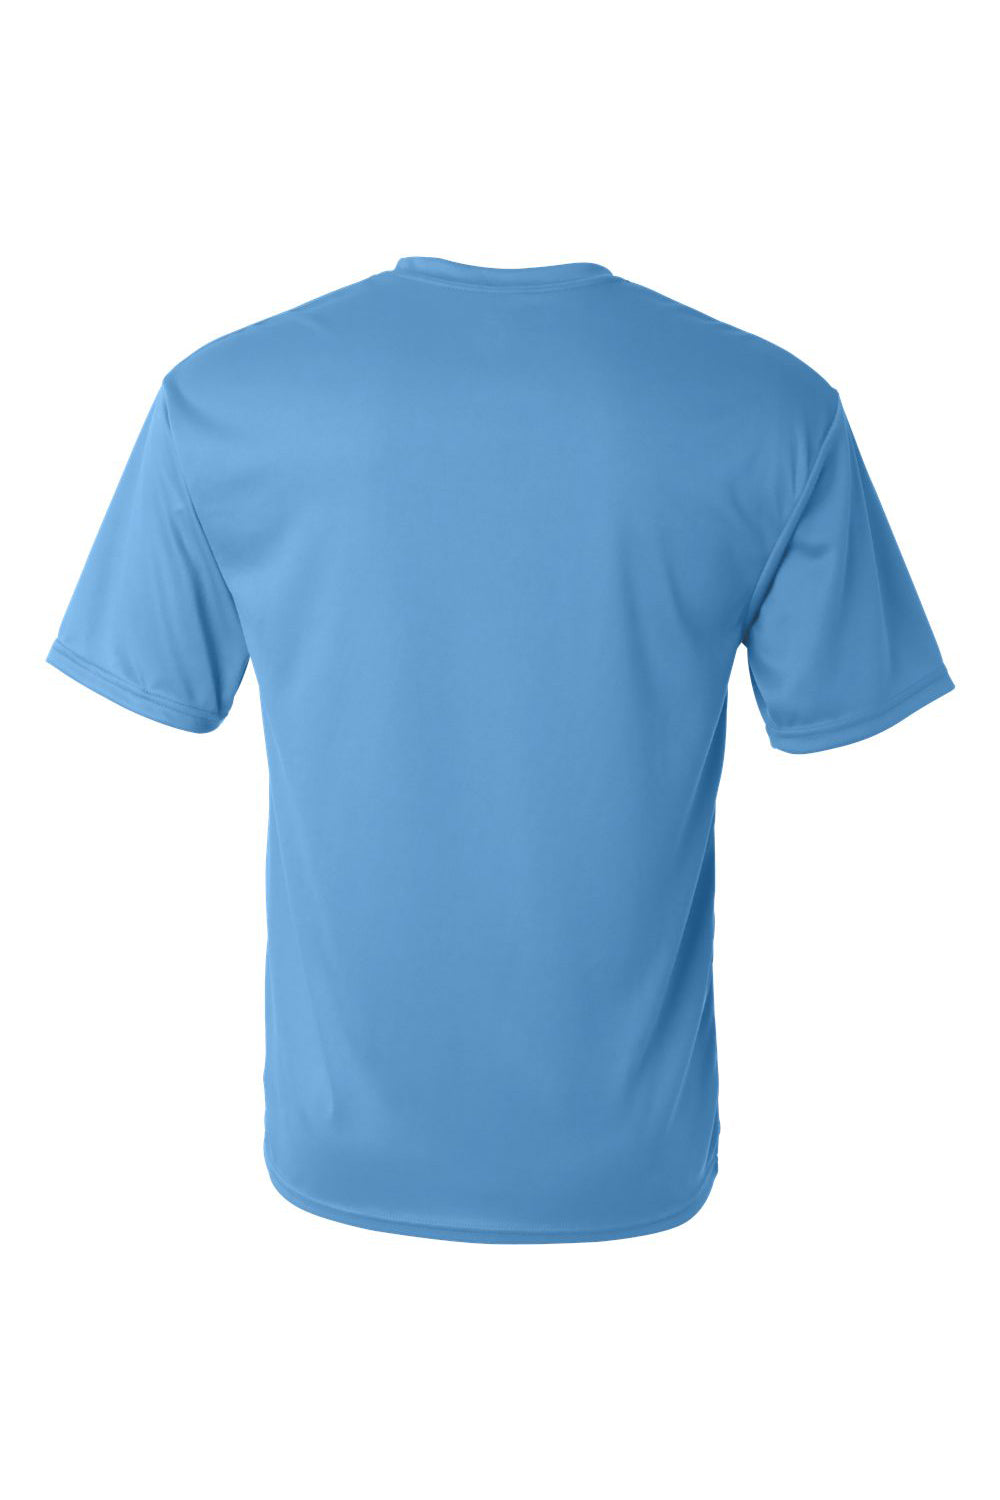 C2 Sport 5100 Mens Performance Moisture Wicking Short Sleeve Crewneck T-Shirt Columbia Blue Flat Back